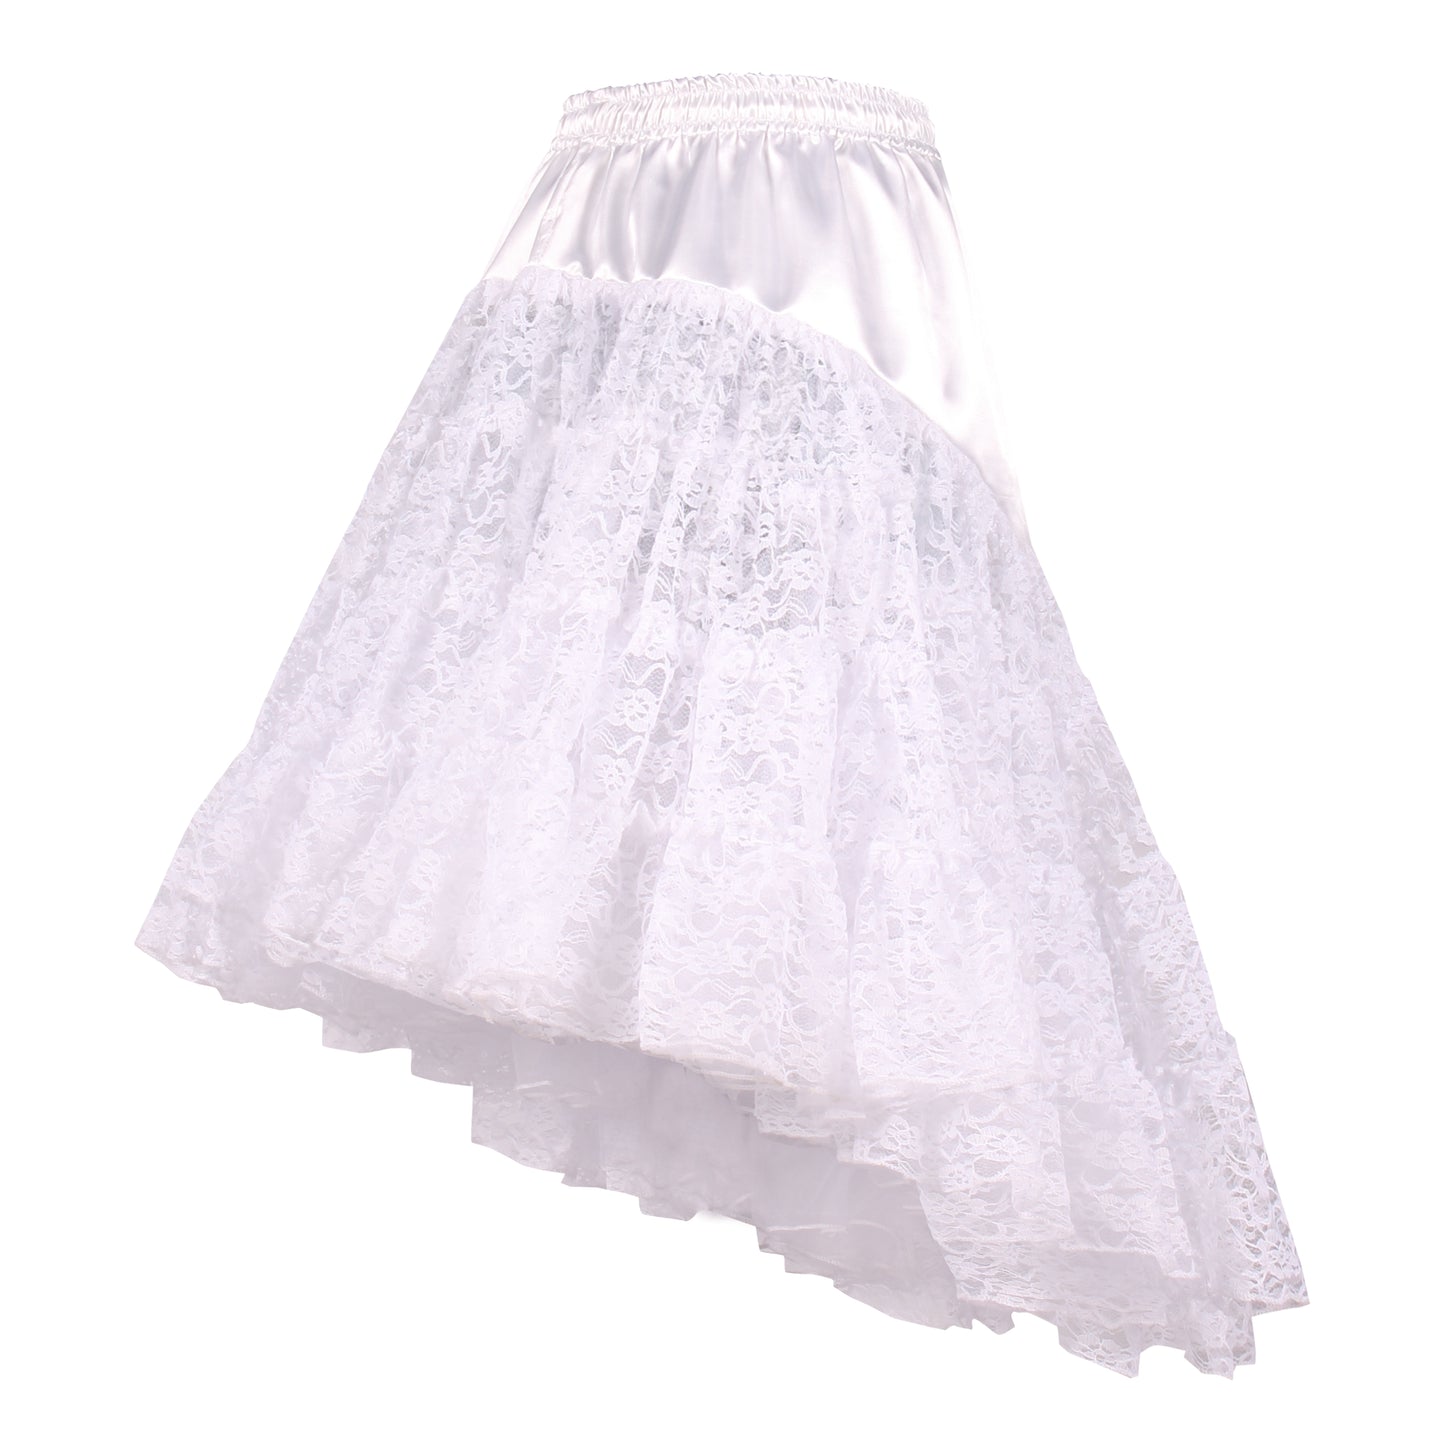 Petticoat lang kant wit